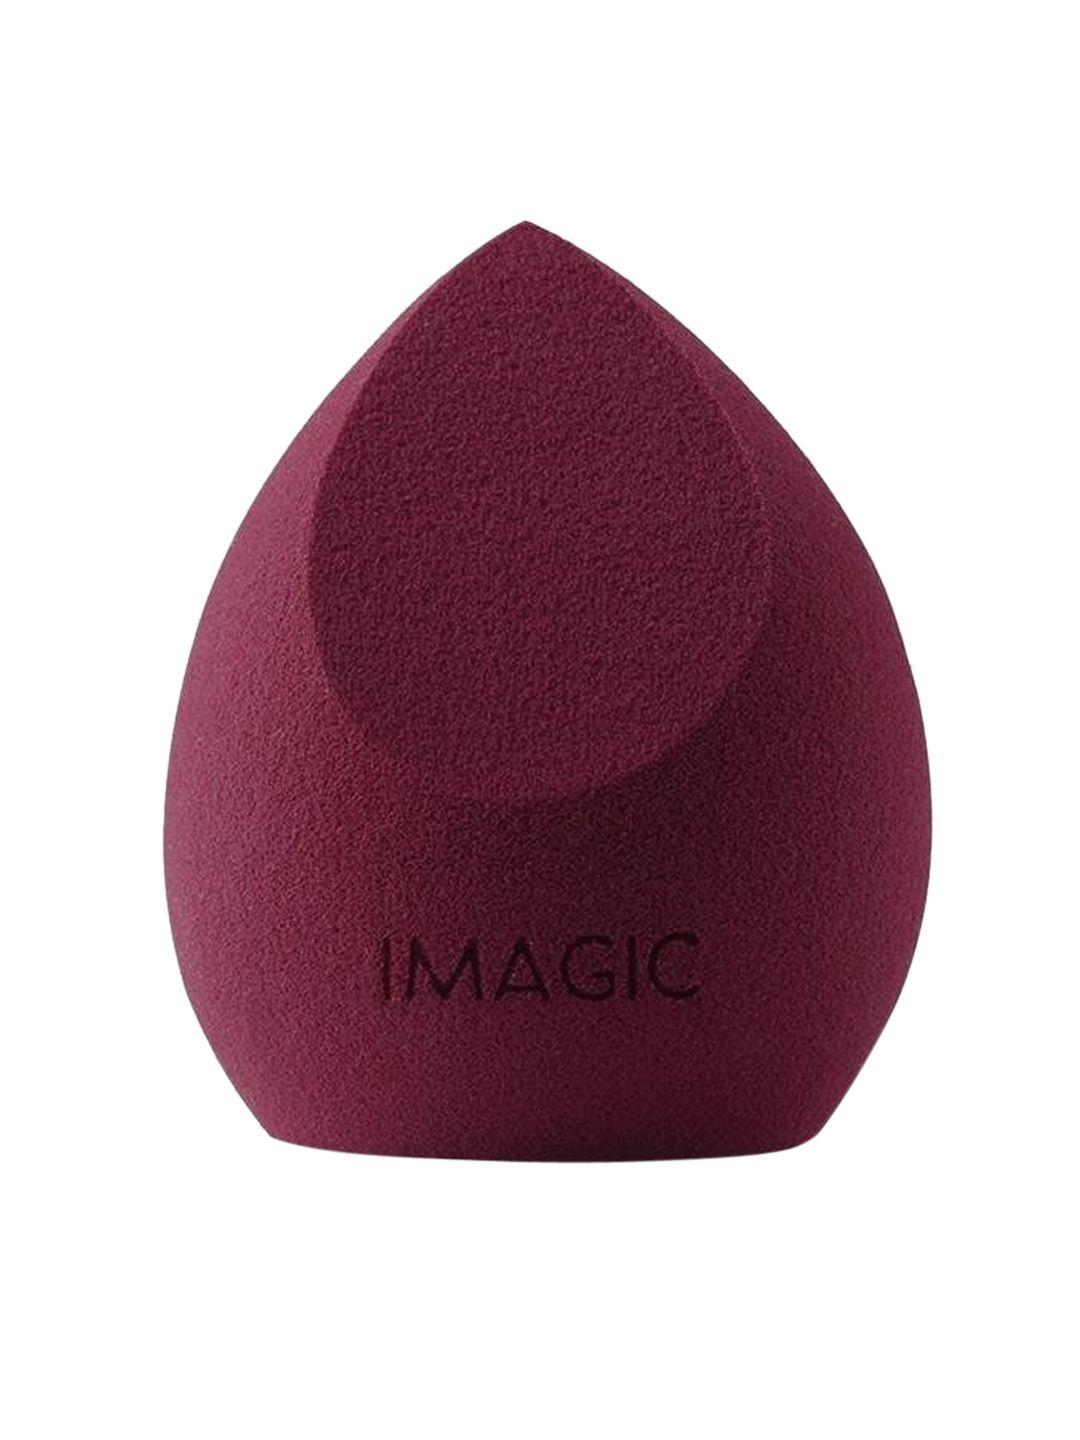 imagic professional cosmetics tl435-04 non latex makeup sponge - burgundy